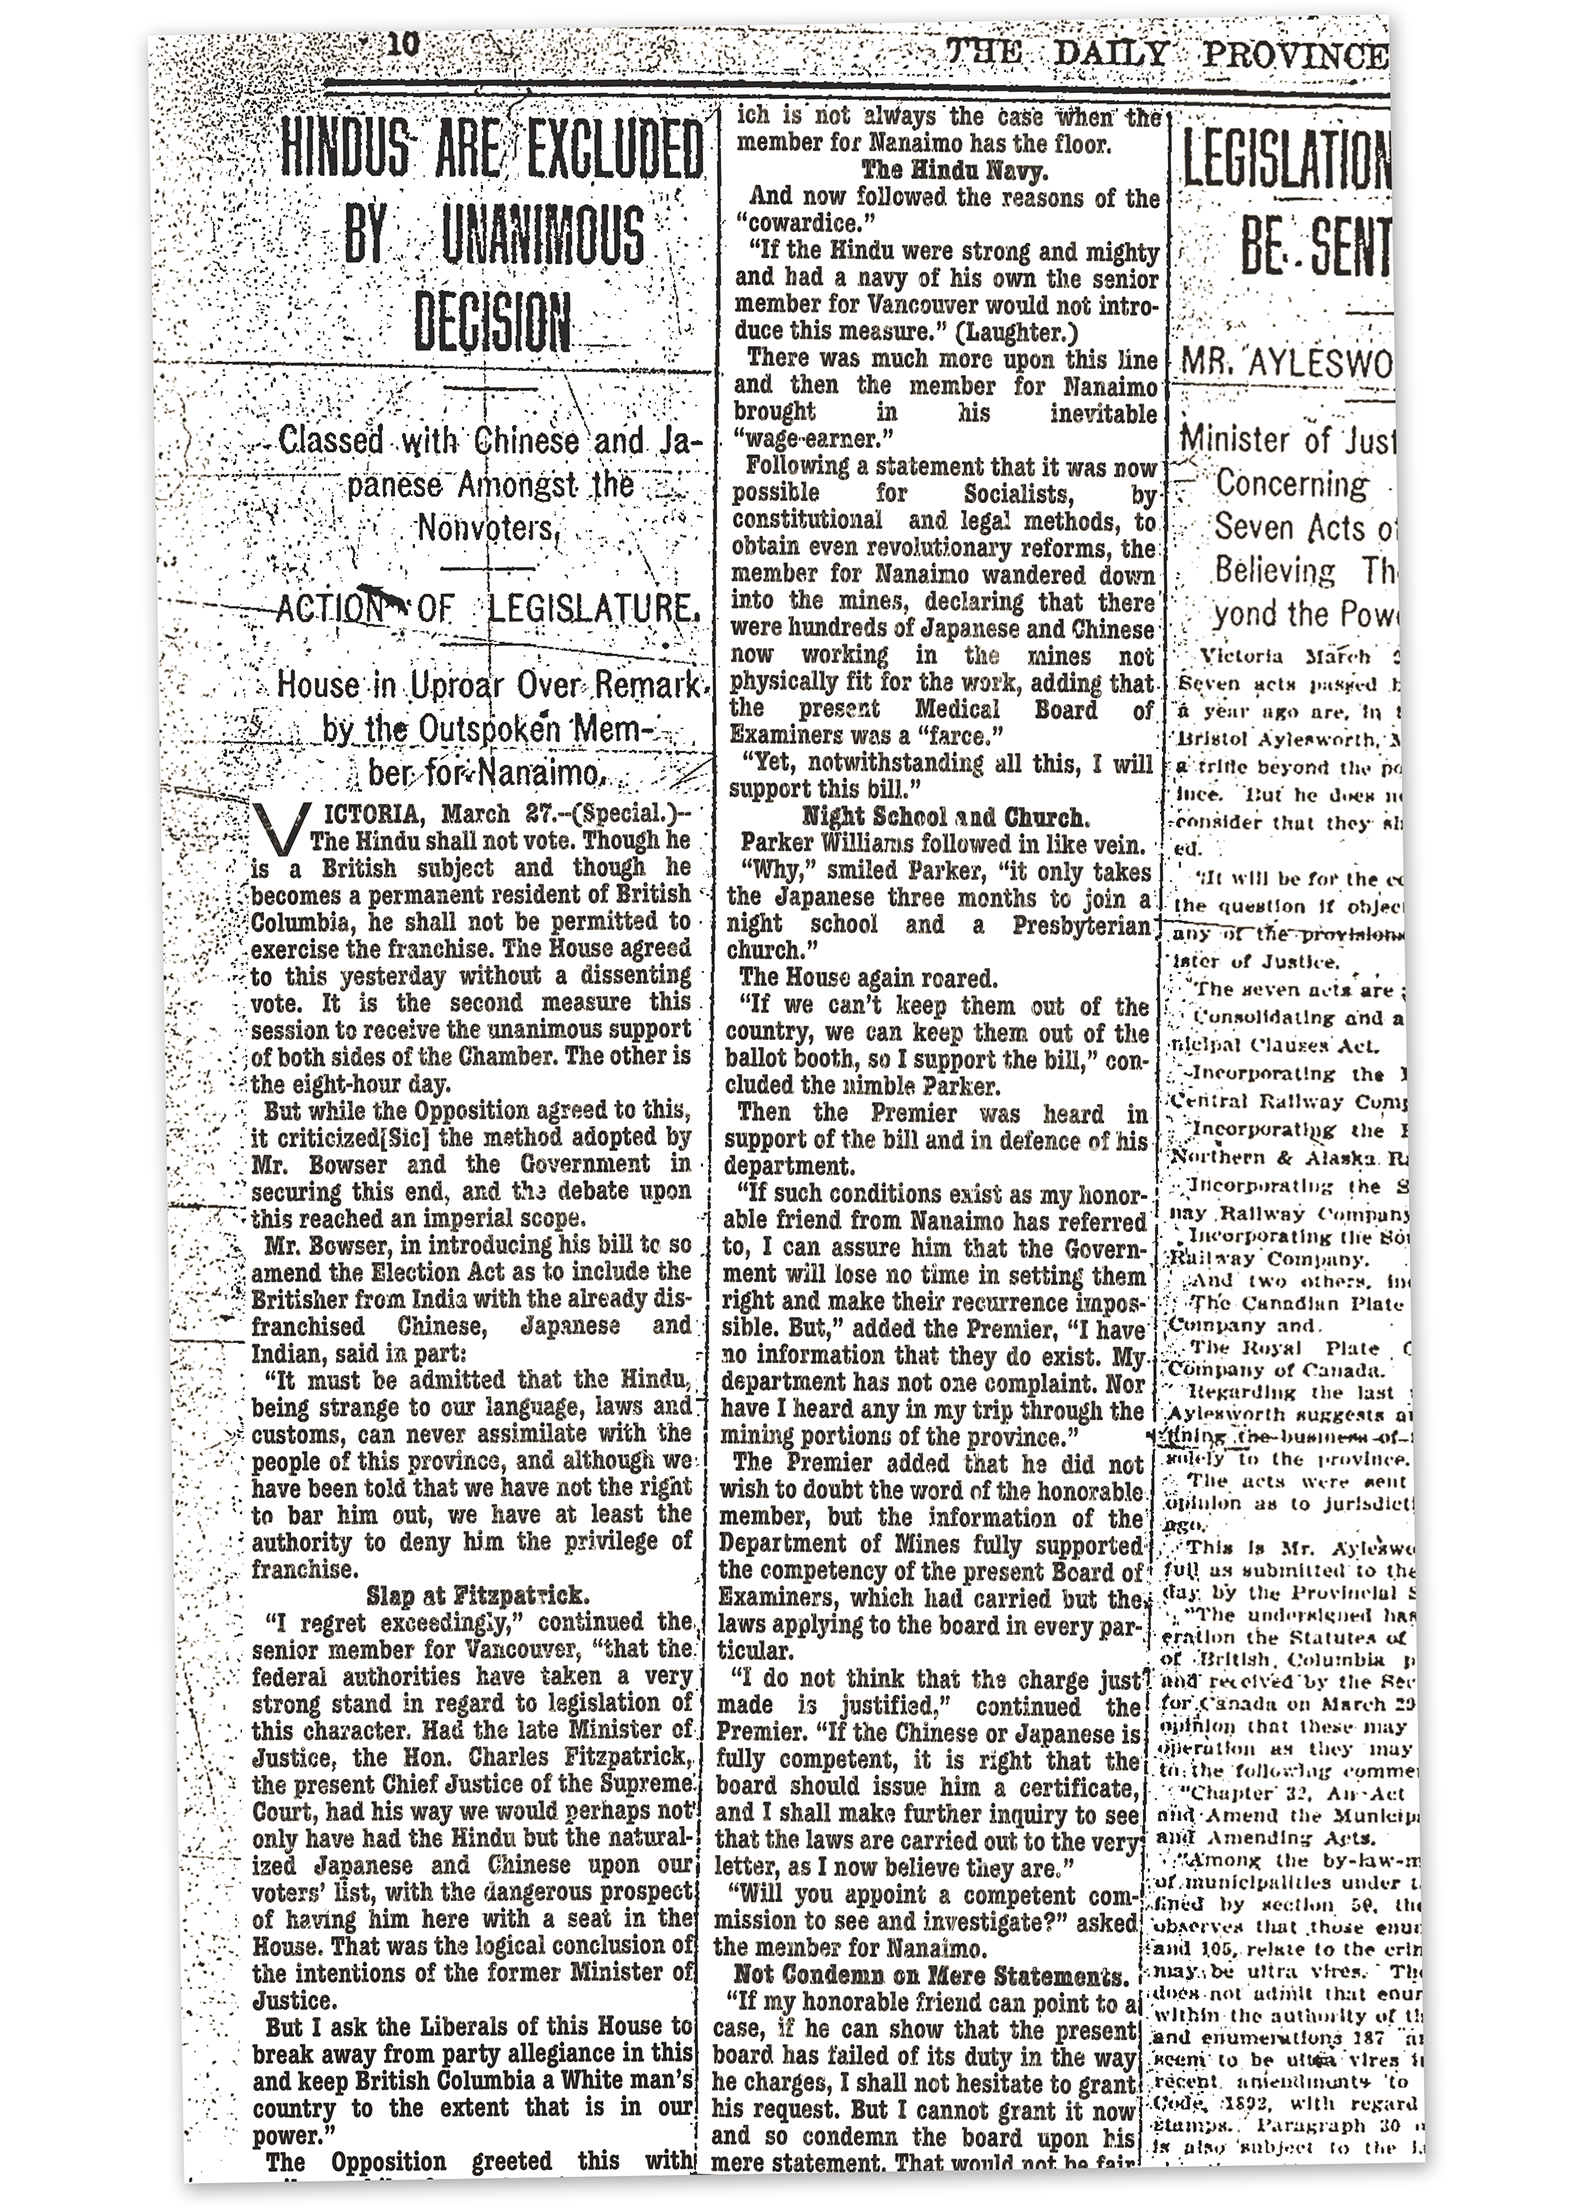 March 27, 1907 Newspaper